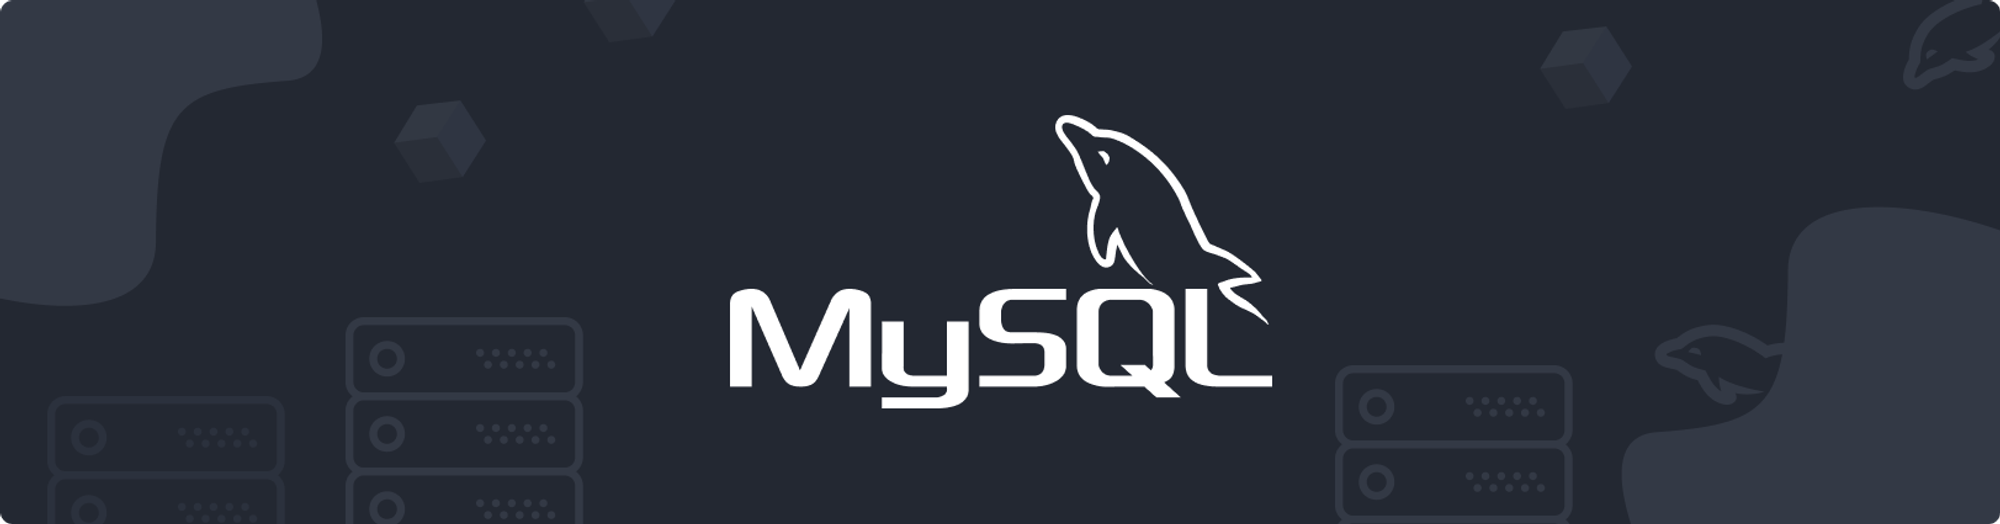 Belajar MySQL: Panduan Lengkap untuk Menguasai Perintah-Perintah SQL